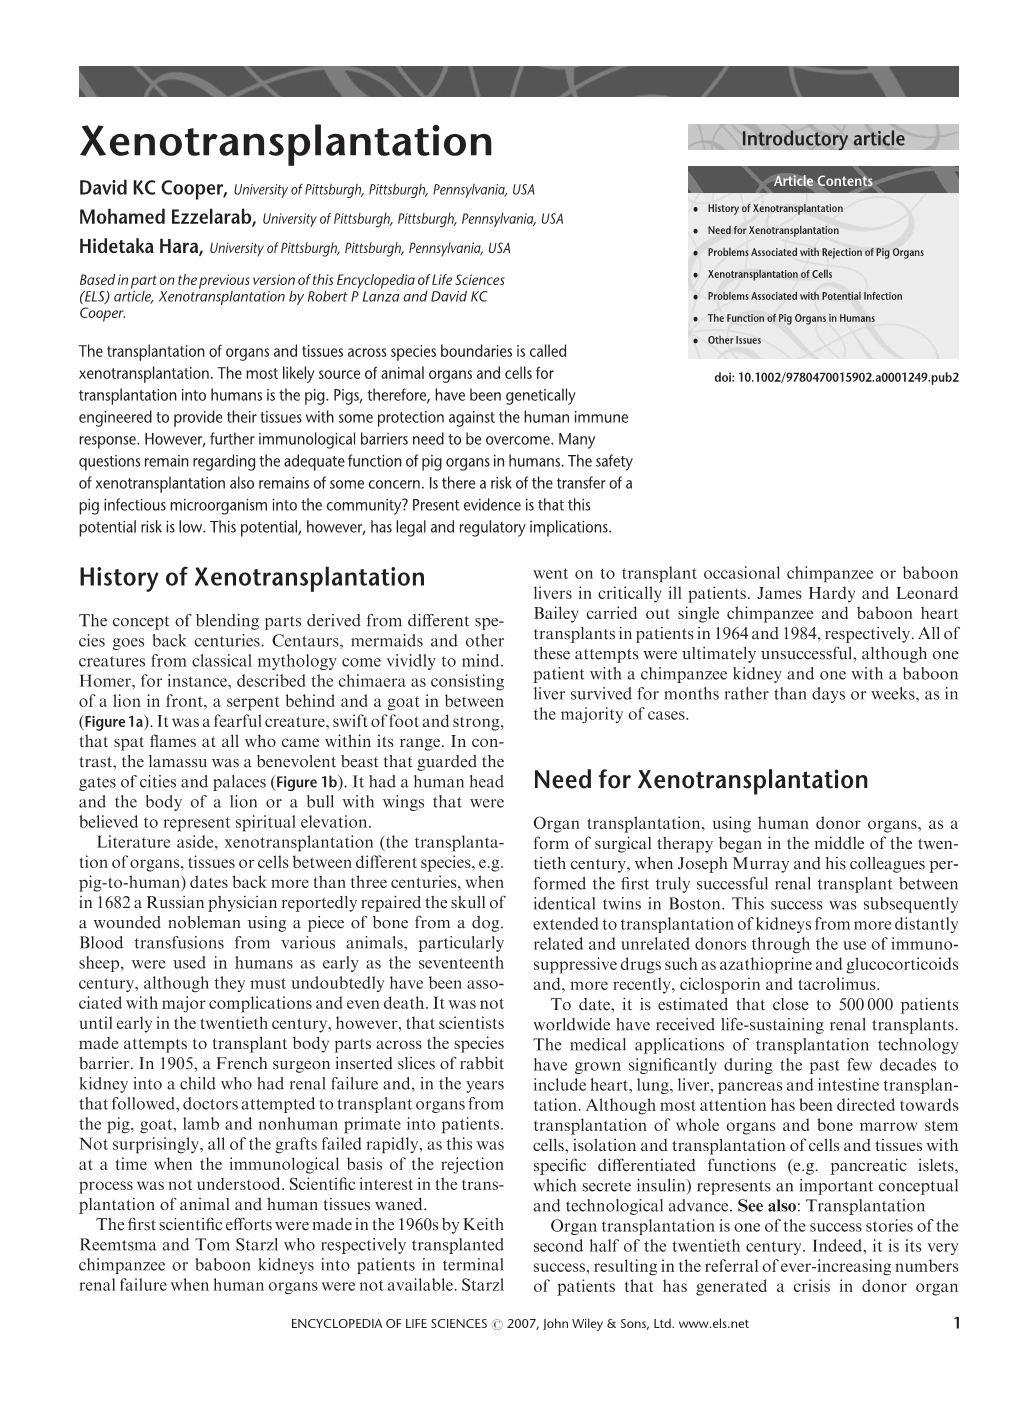 "Xenotransplantation". In: Encyclopedia of Life Sciences (ELS)